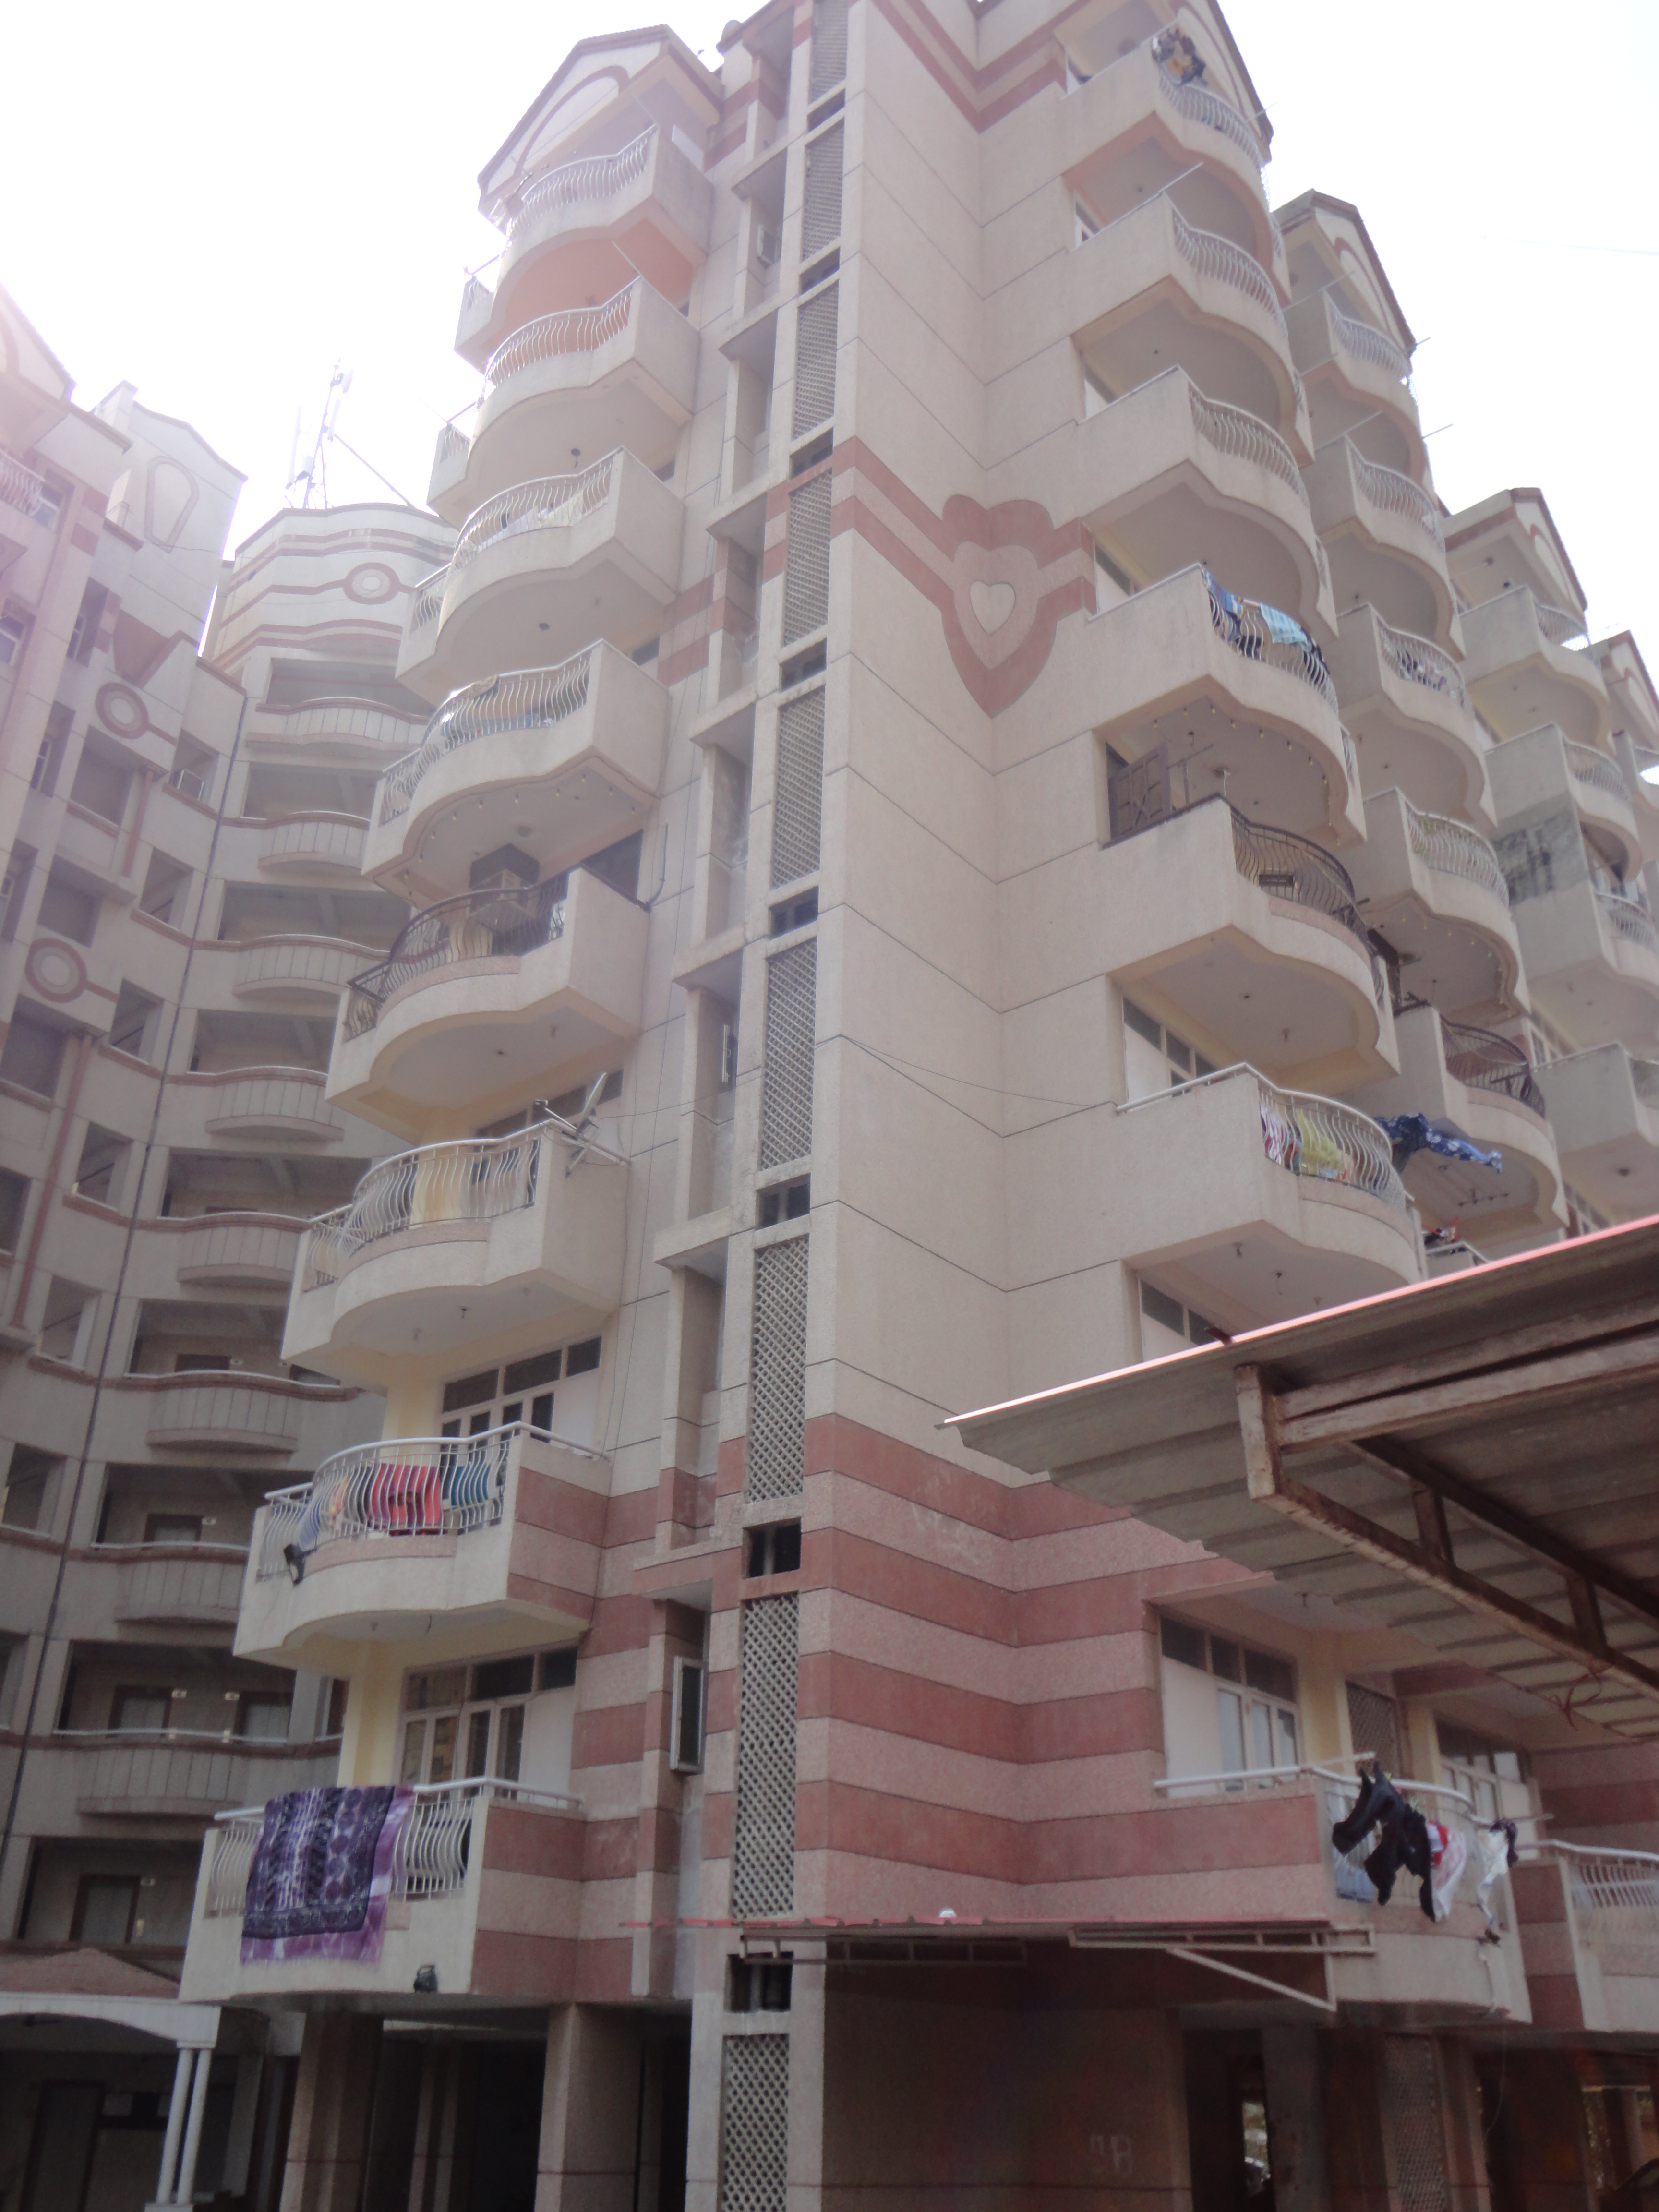 Ashoka Apartments CGHS Project Deails